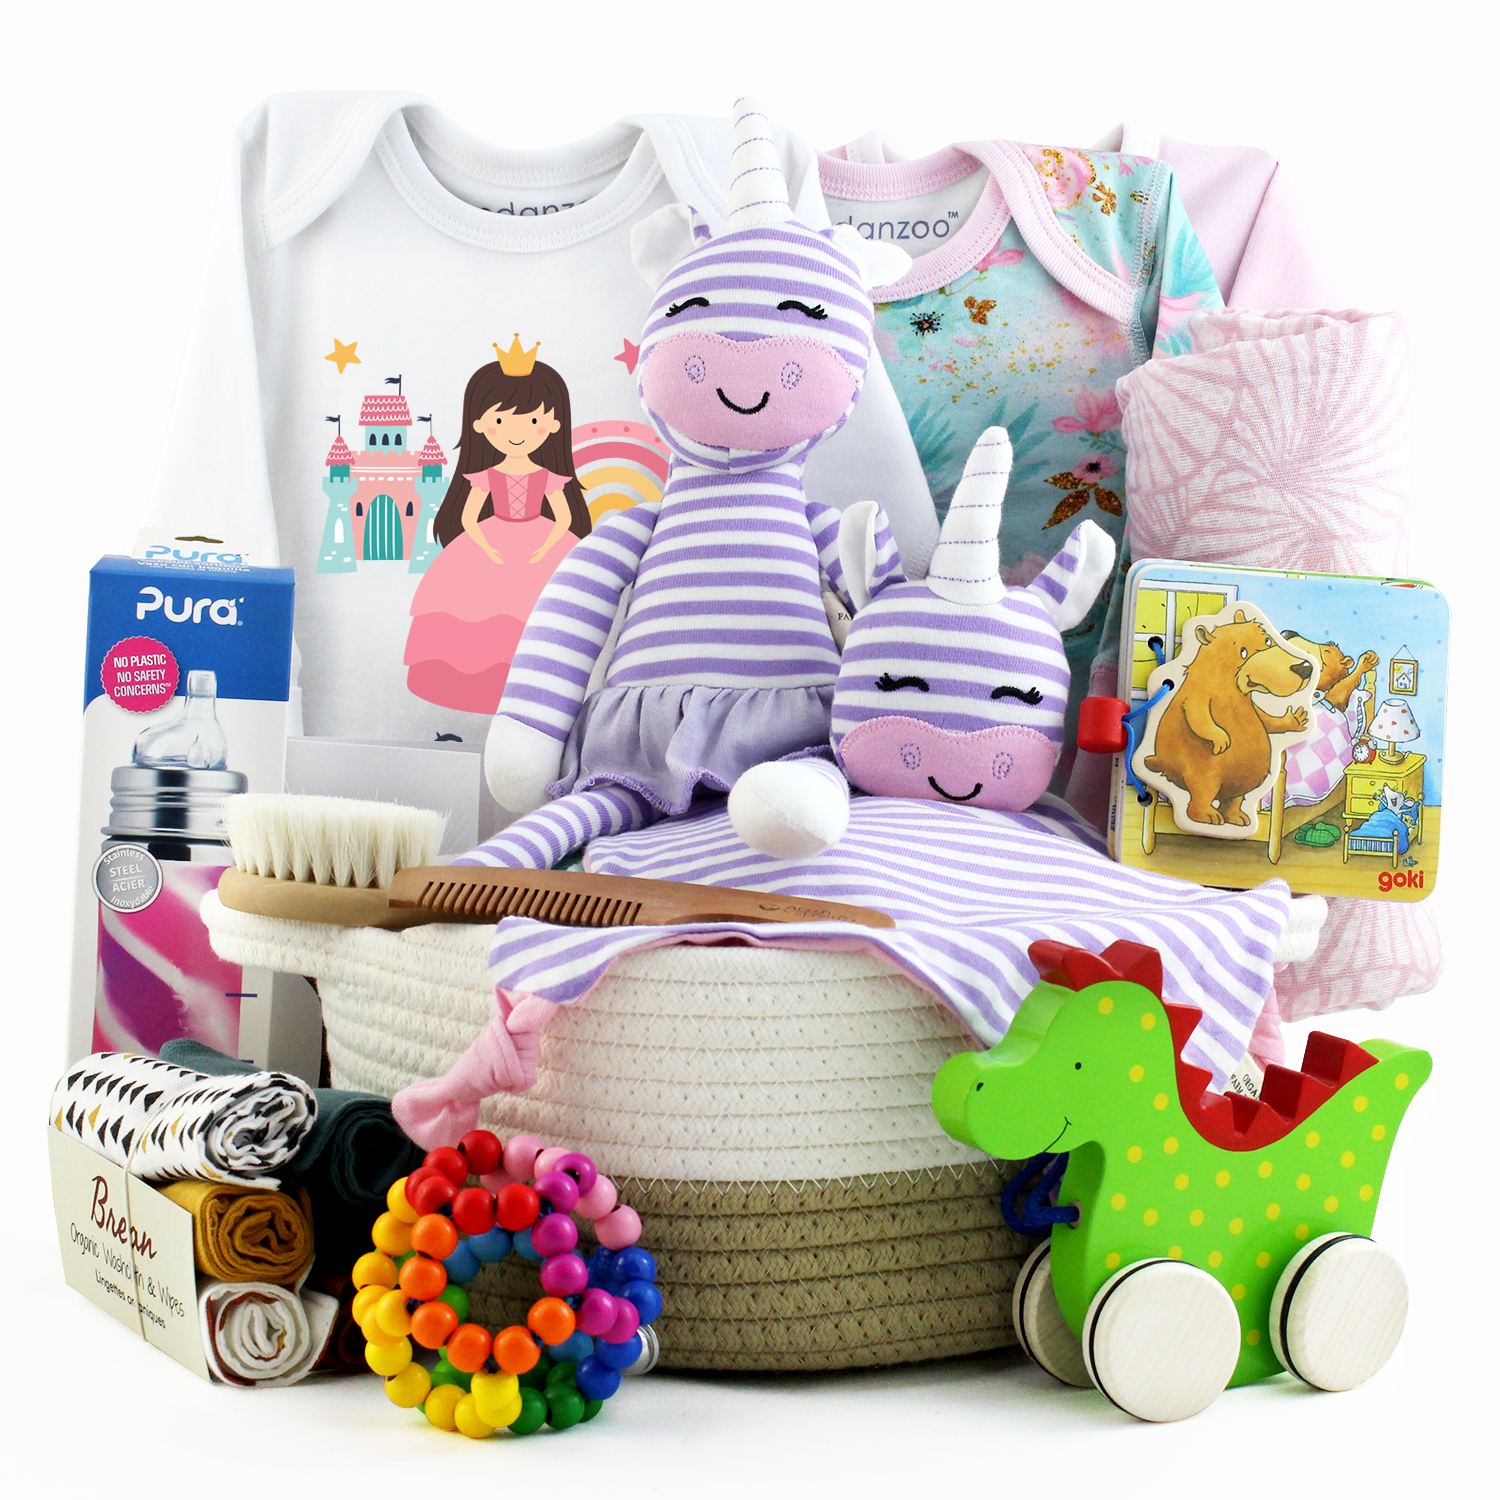 Zeronto Baby Girl Gift Basket - The Adventure of the Royal Princess